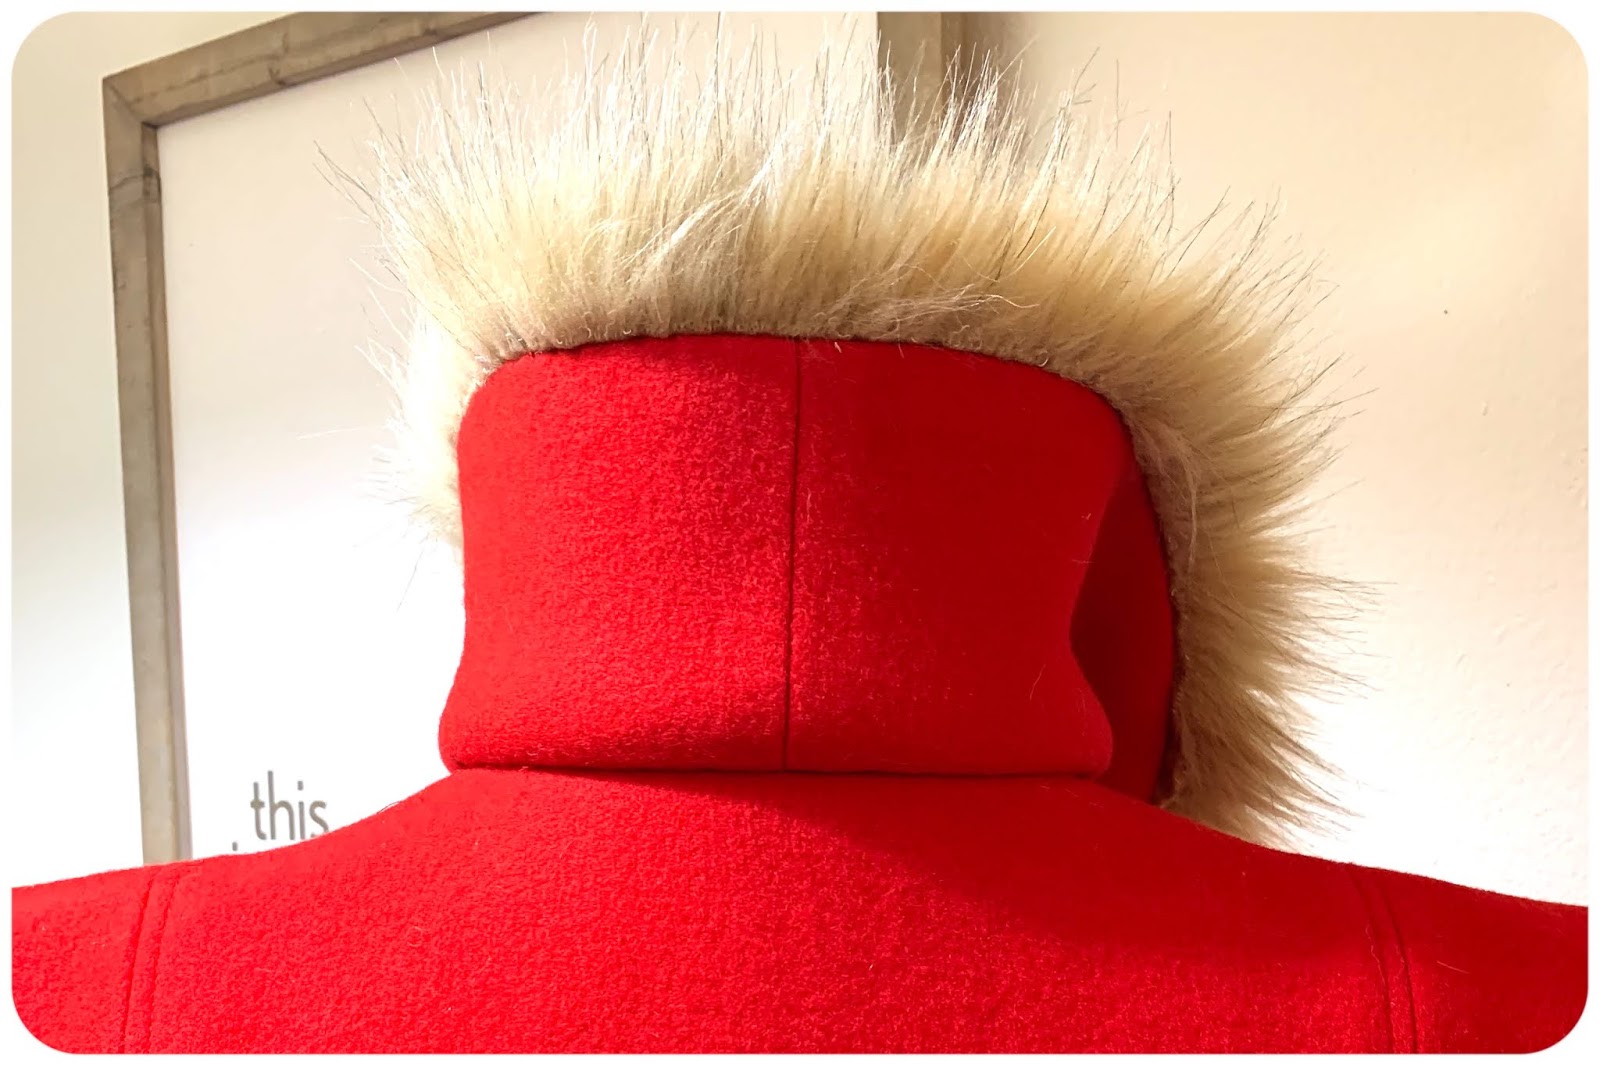 Simplicity 4403 - Fur-Trimmed Red Wool Coat - Erica Bunker DIY Style!